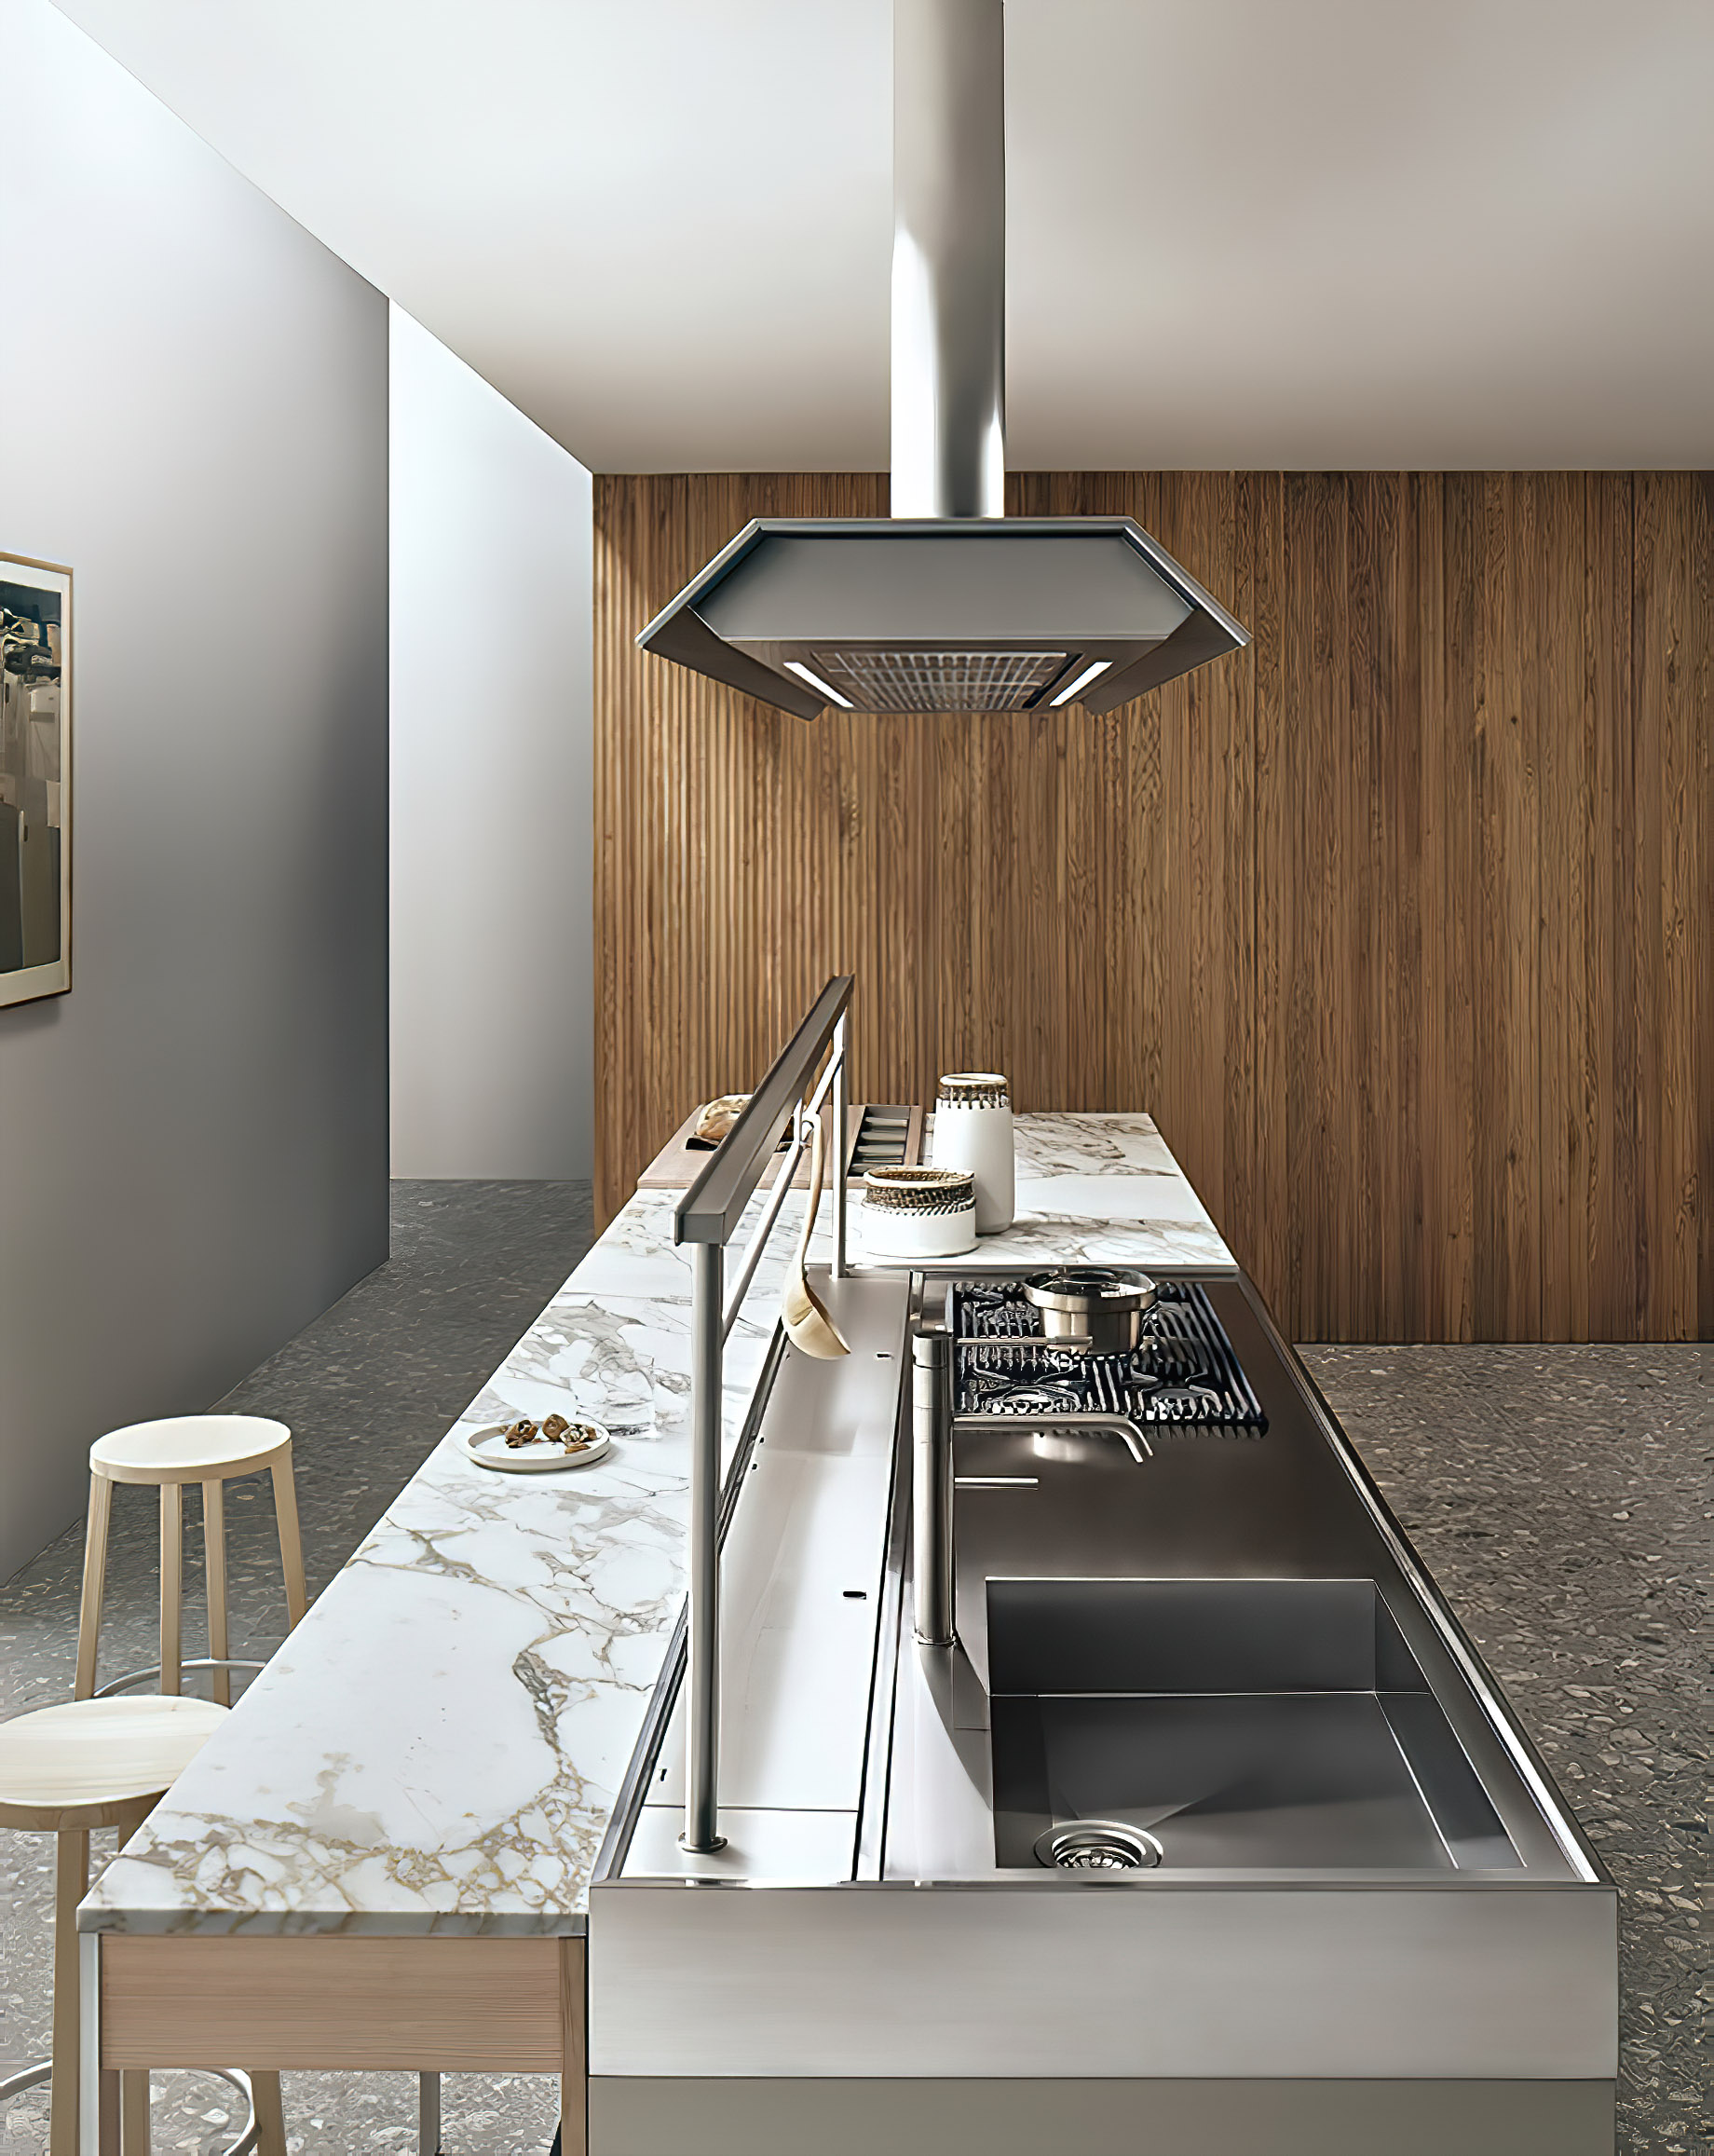 K-lab Contemporary Kitchen Ernestomeda Italy - Giuseppe Bavuso - Planet Hood